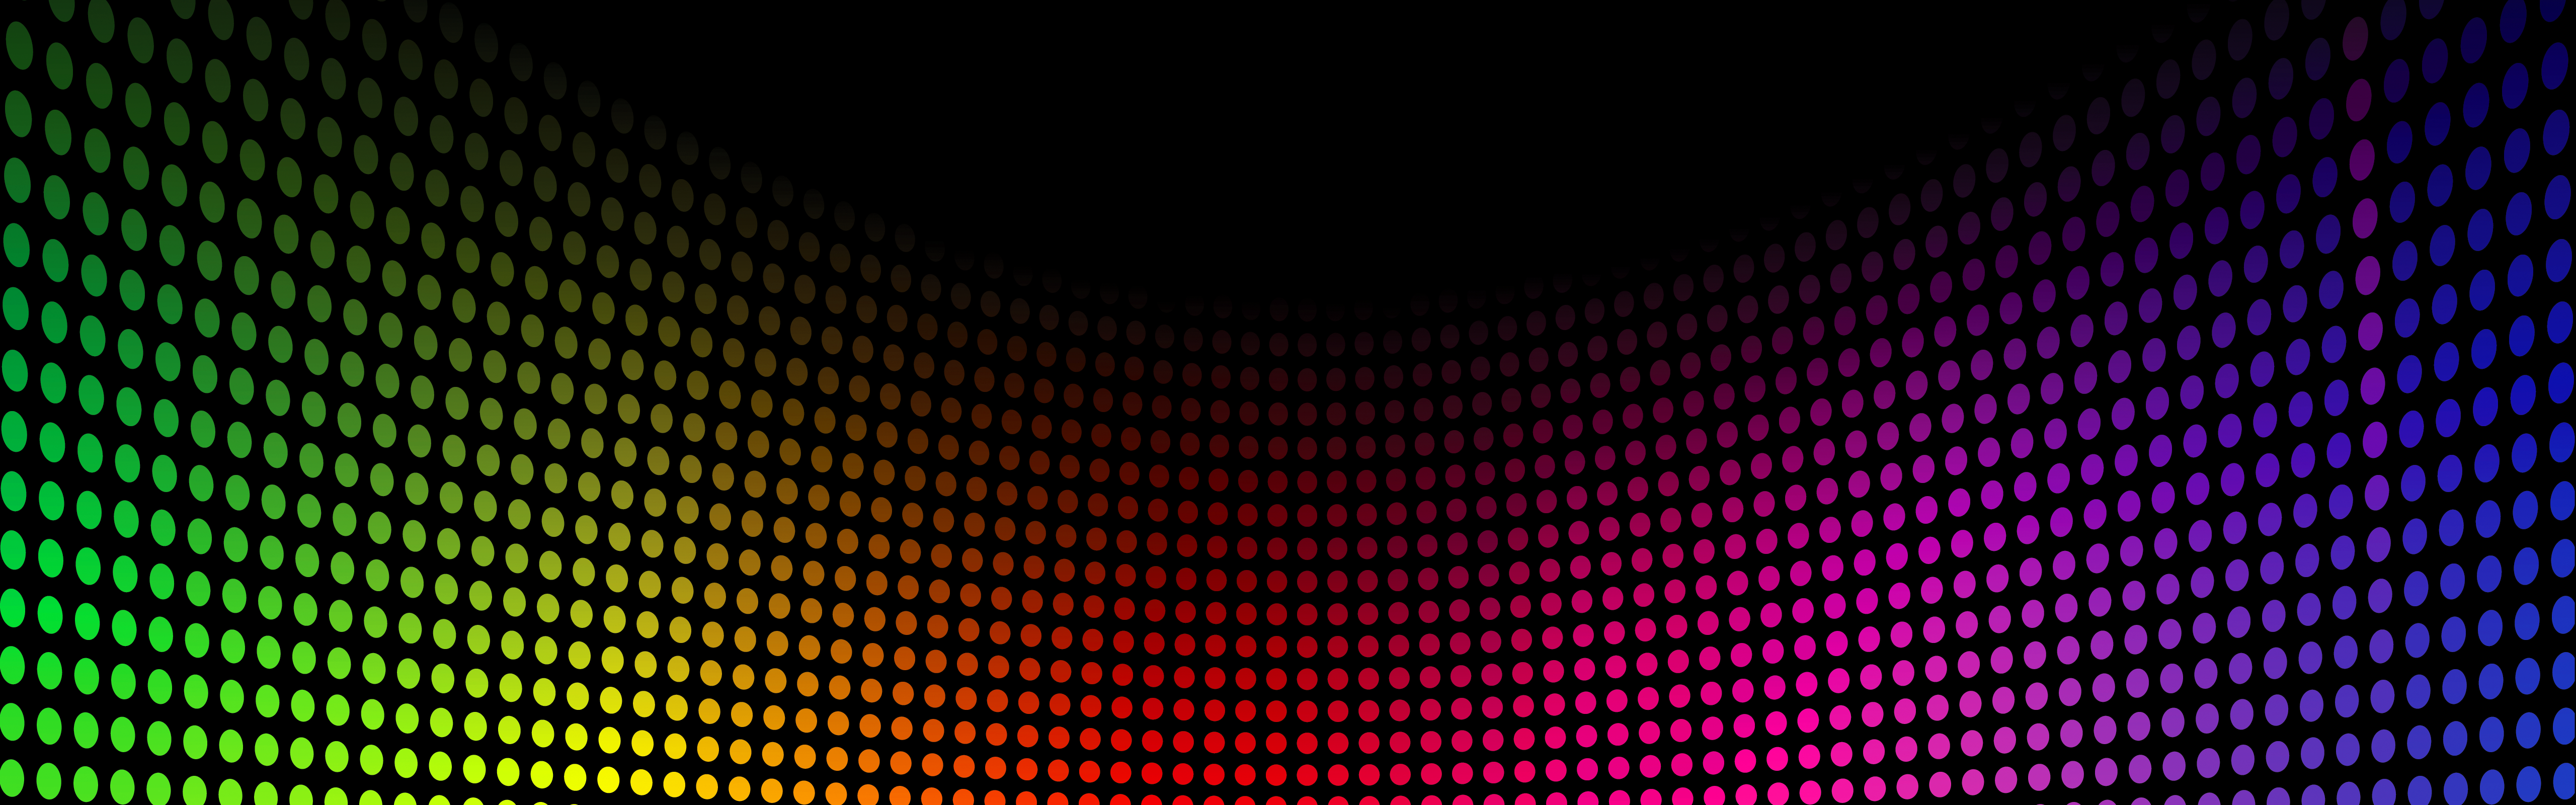 LED Wallpaper Free LED Background